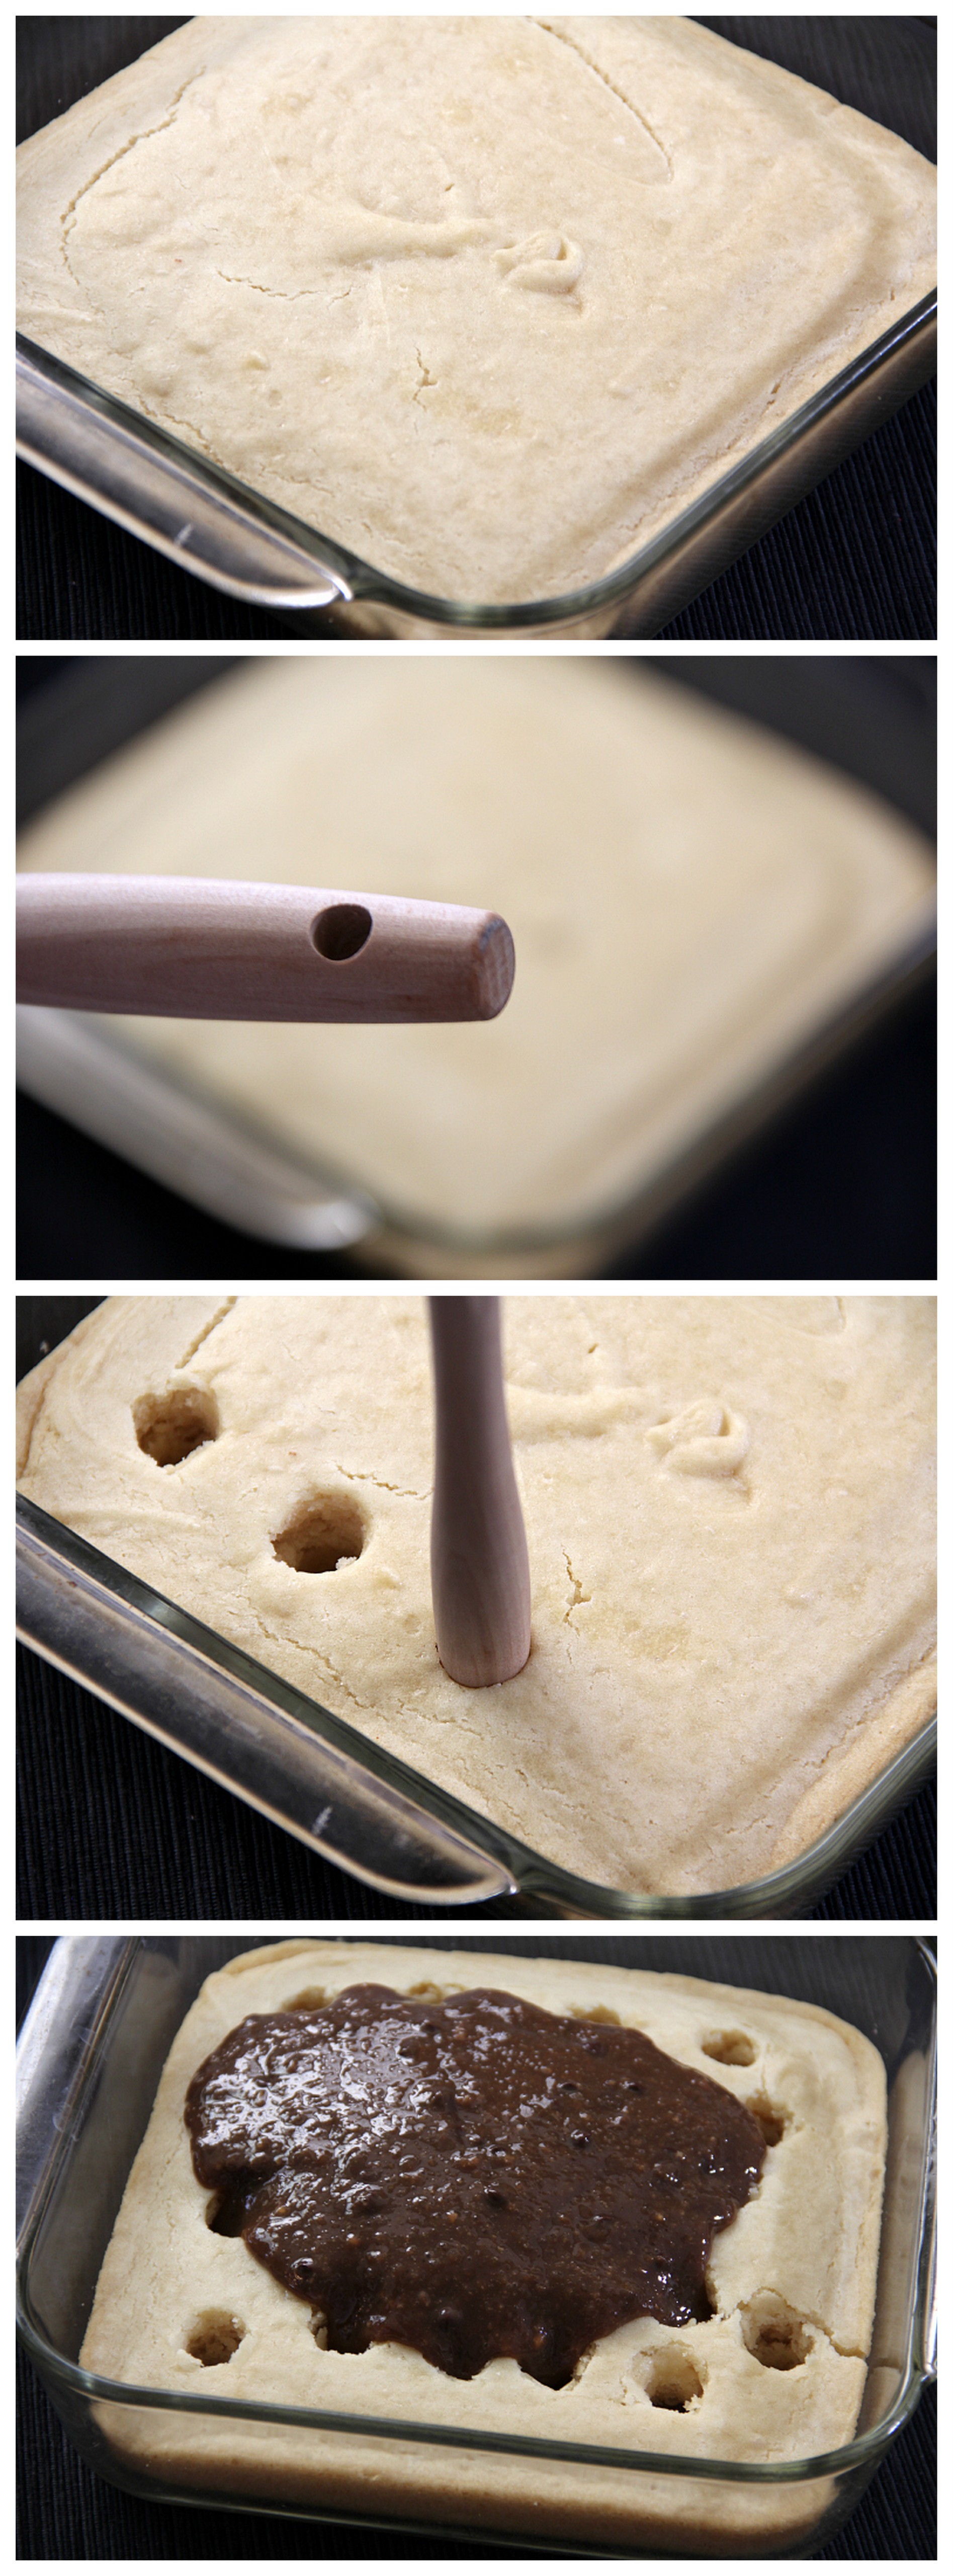 How to Make a Poke Cake